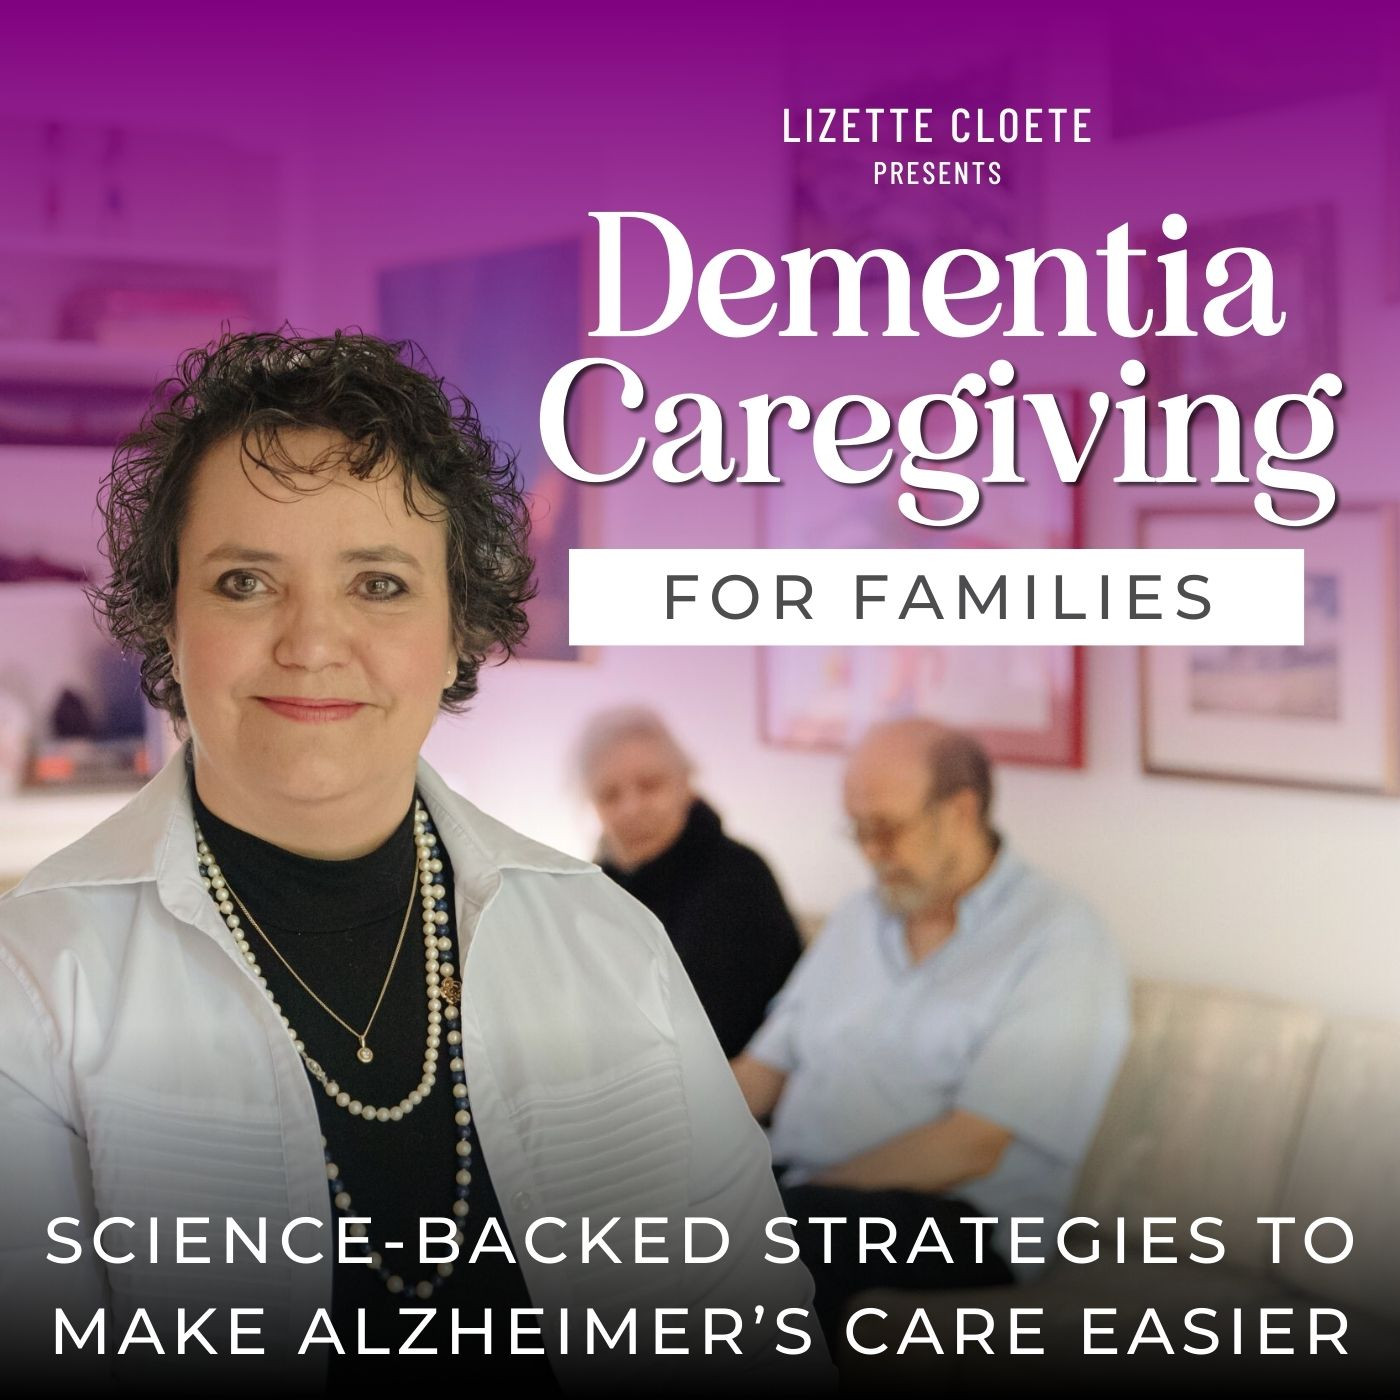 Dementia Caregiving for Families: Tips for Christian Caregivers, Alzheimer’s Caregiving, Challenging Dementia Behaviors and Caregiver Stress Management